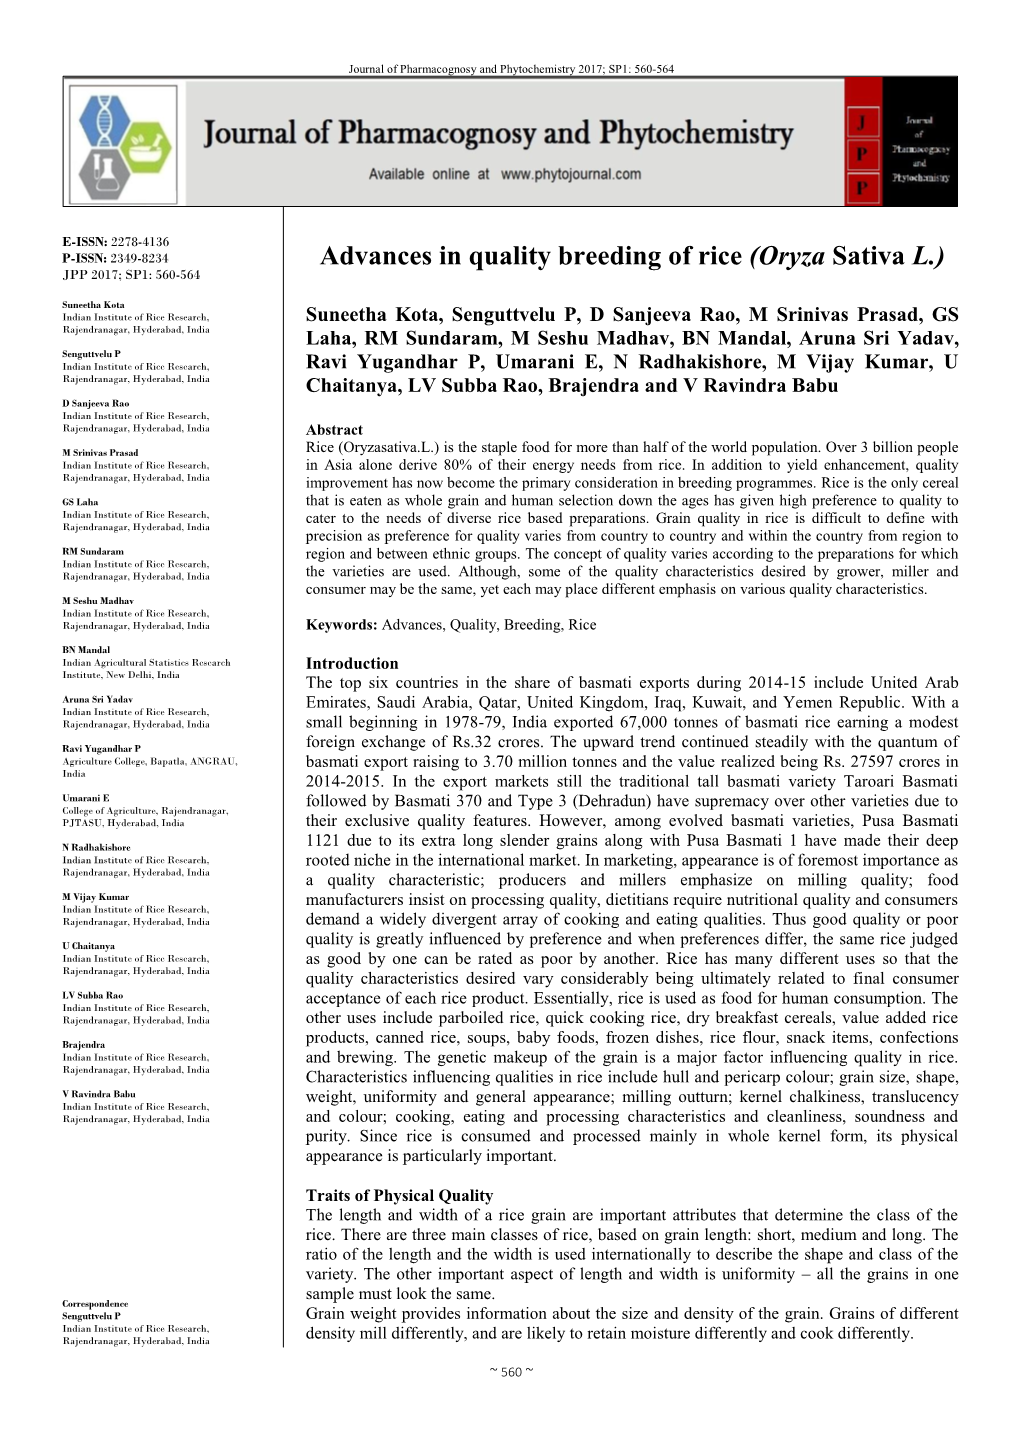 Advances in Quality Breeding of Rice (Oryza Sativa L.) JPP 2017; SP1: 560-564